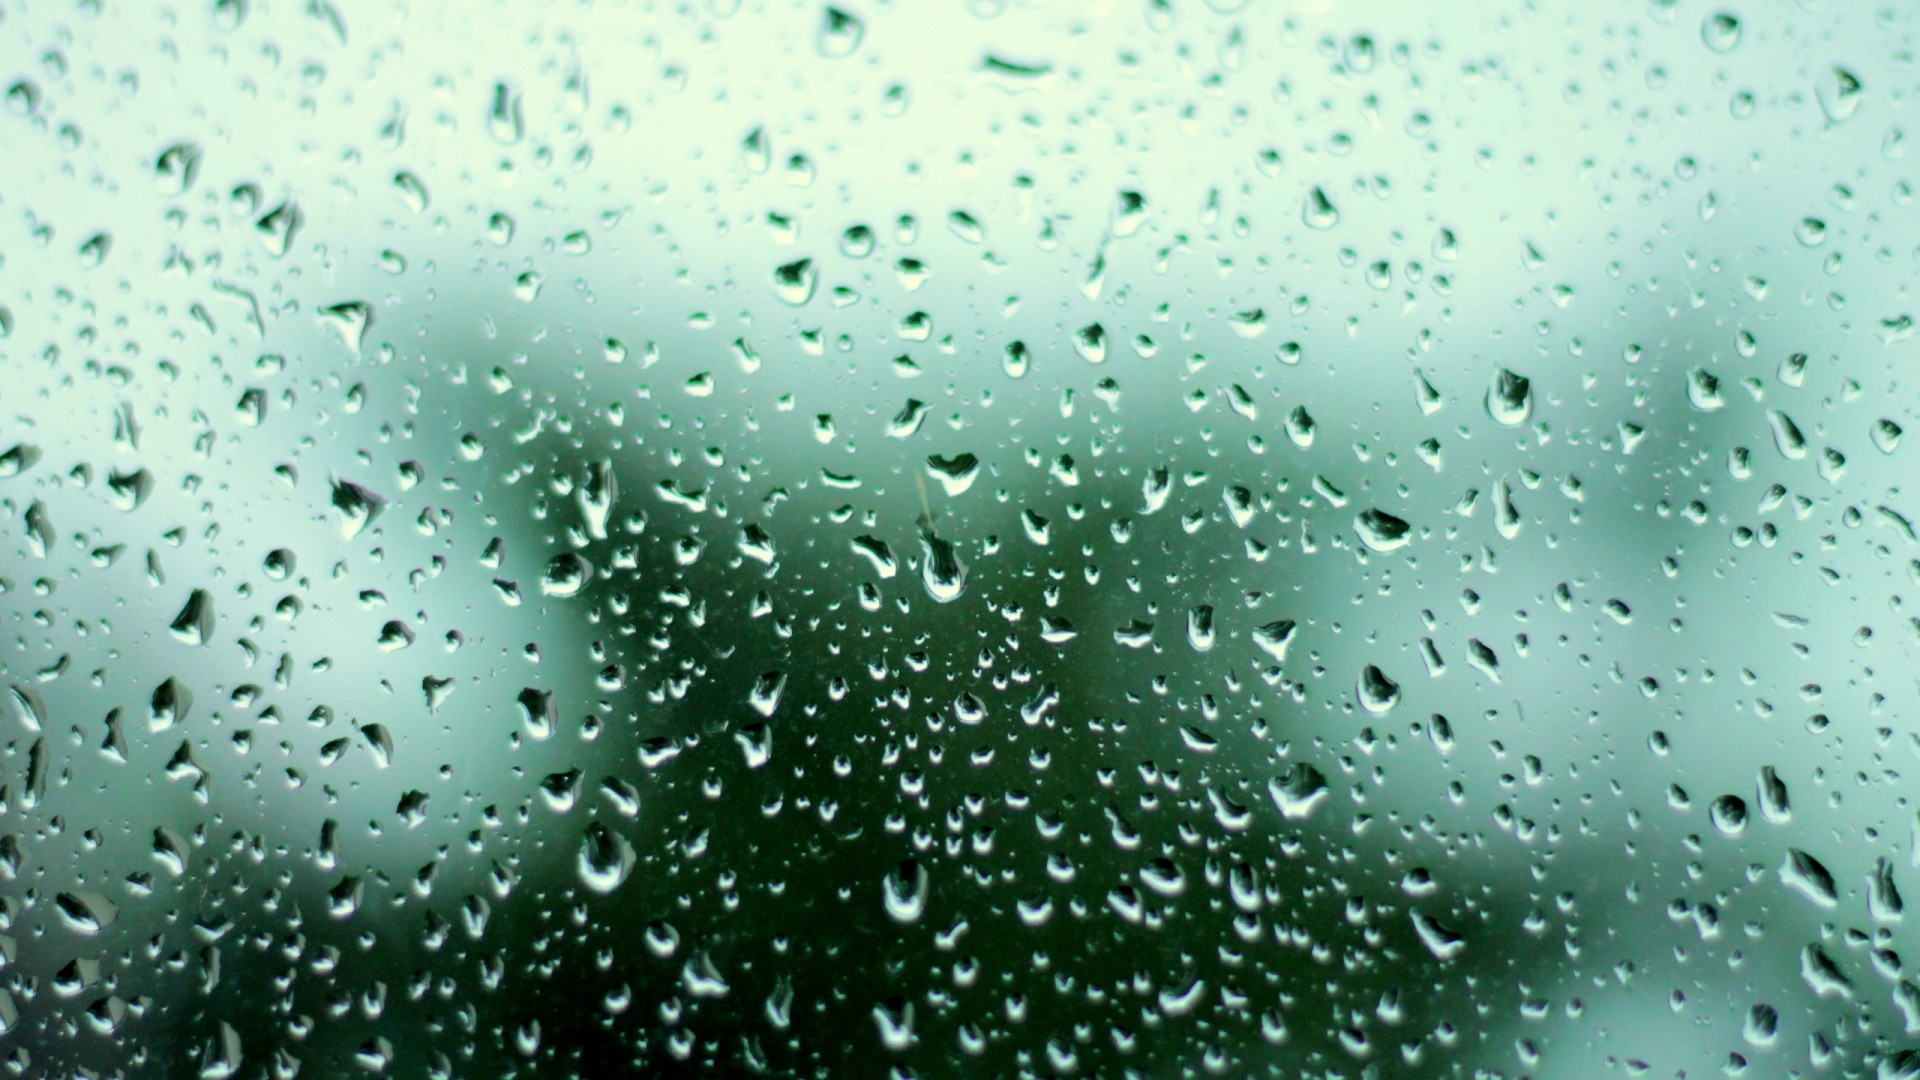 Full View and Download Blur Rain Drops Wallpaper